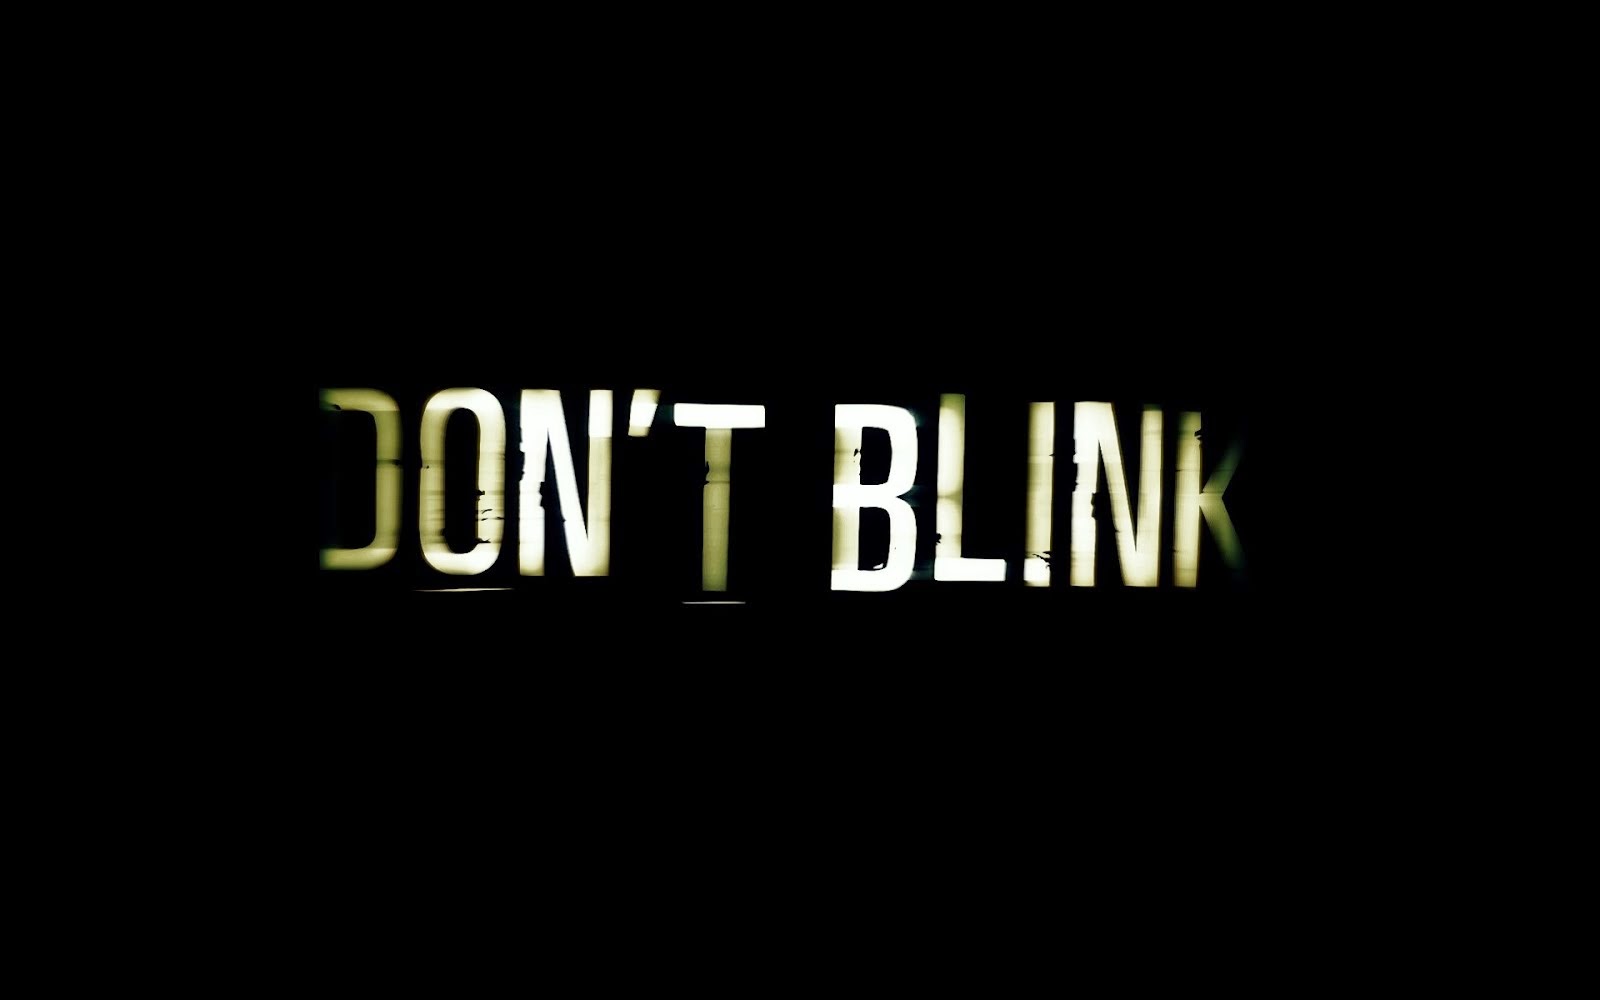 Whatever you do don't blink